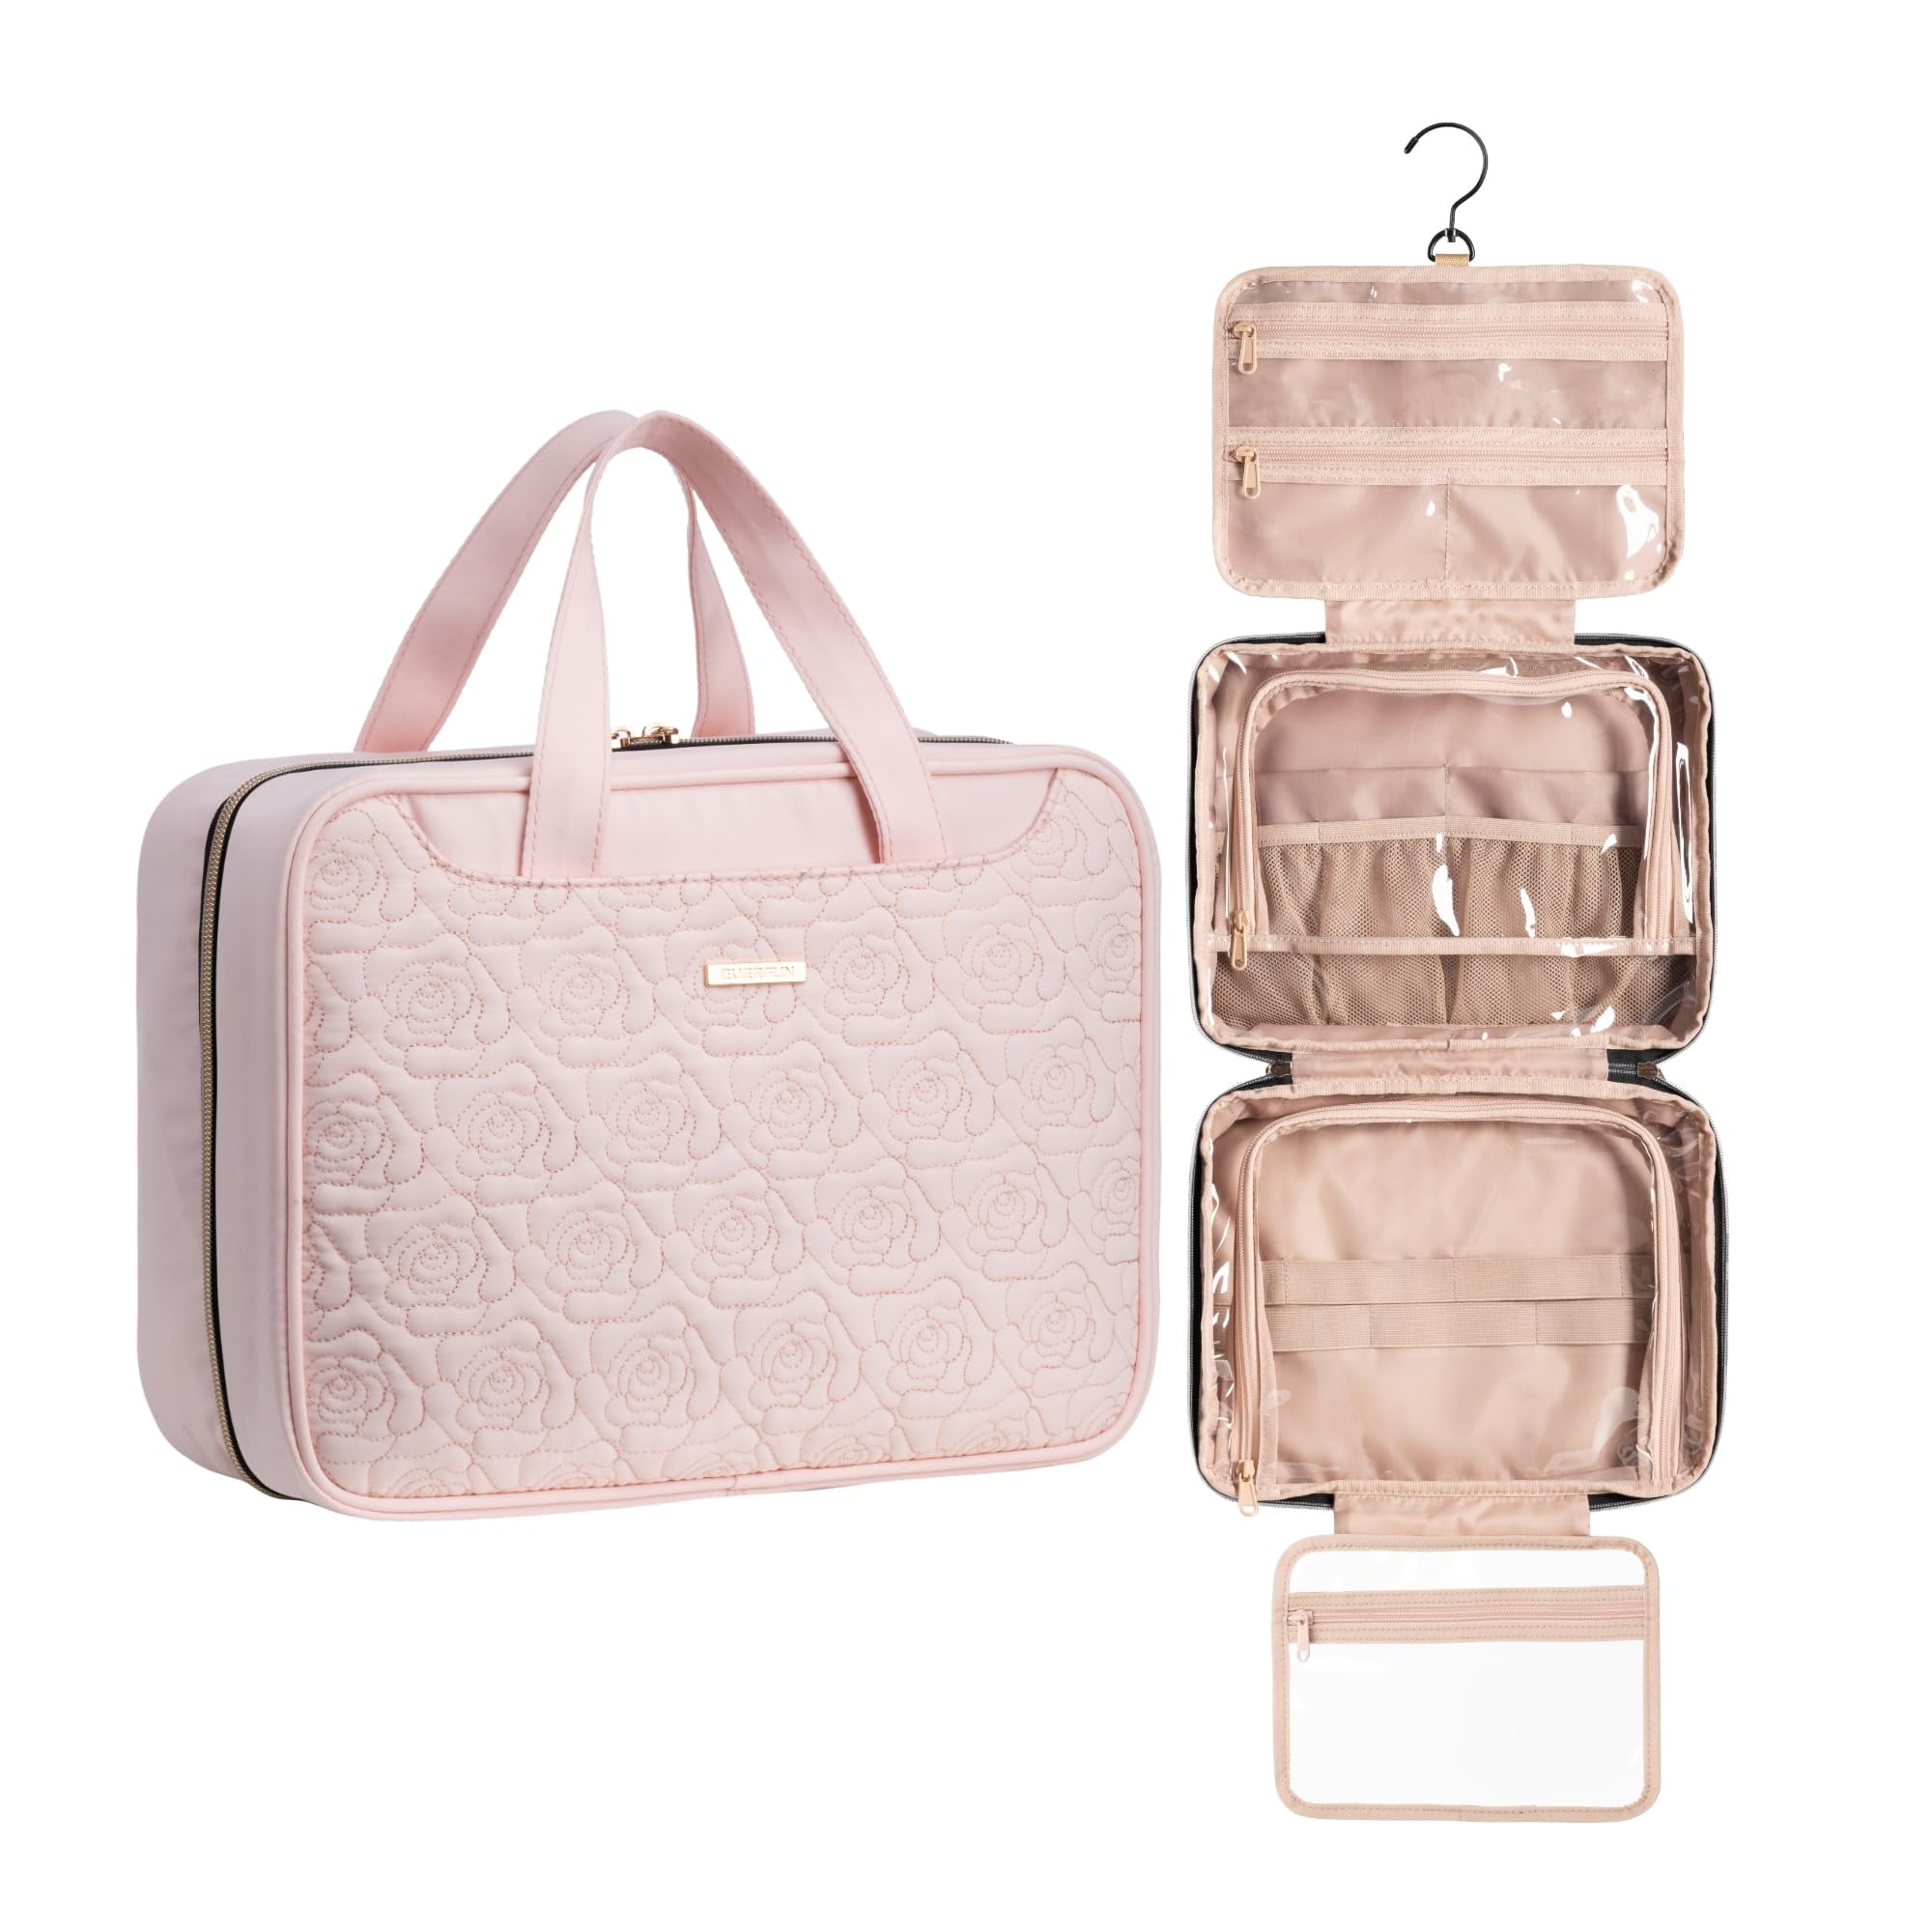 EVERFUN Travel Makeup Bag for Women Hanging Toiletry Bag Cosmetic Bag ...